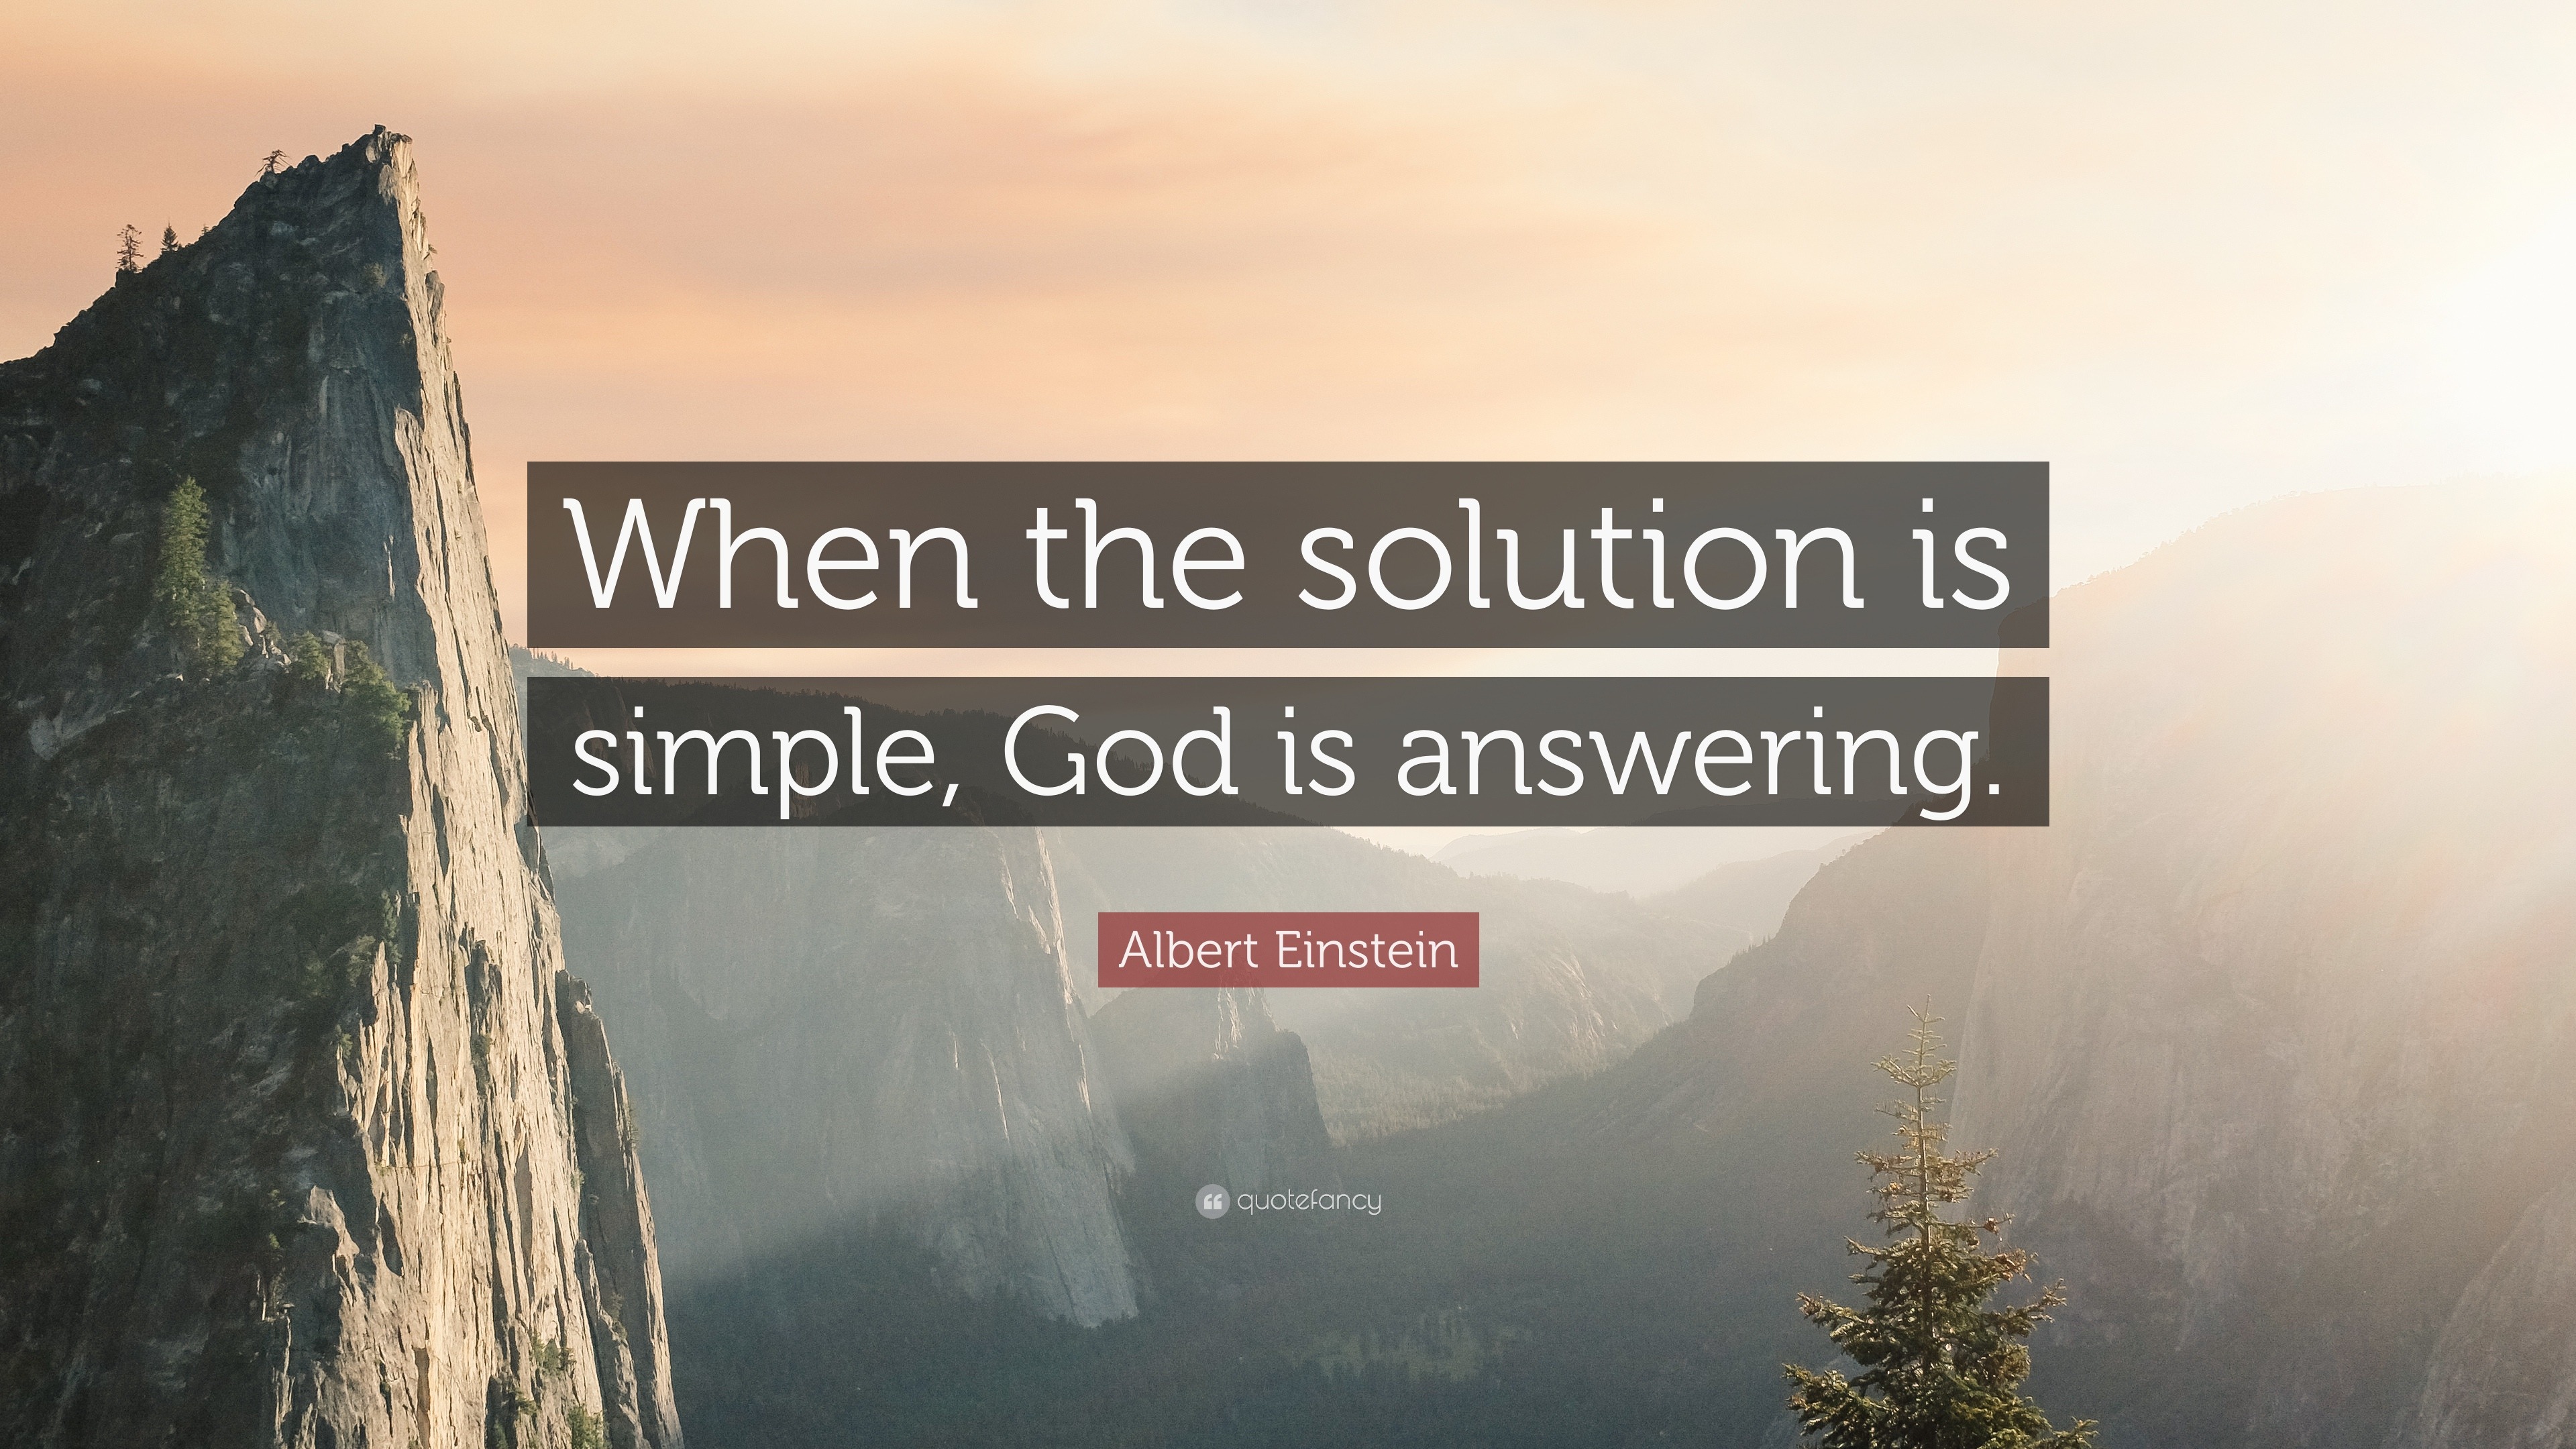 Albert Einstein Quote “When the solution is simple, God